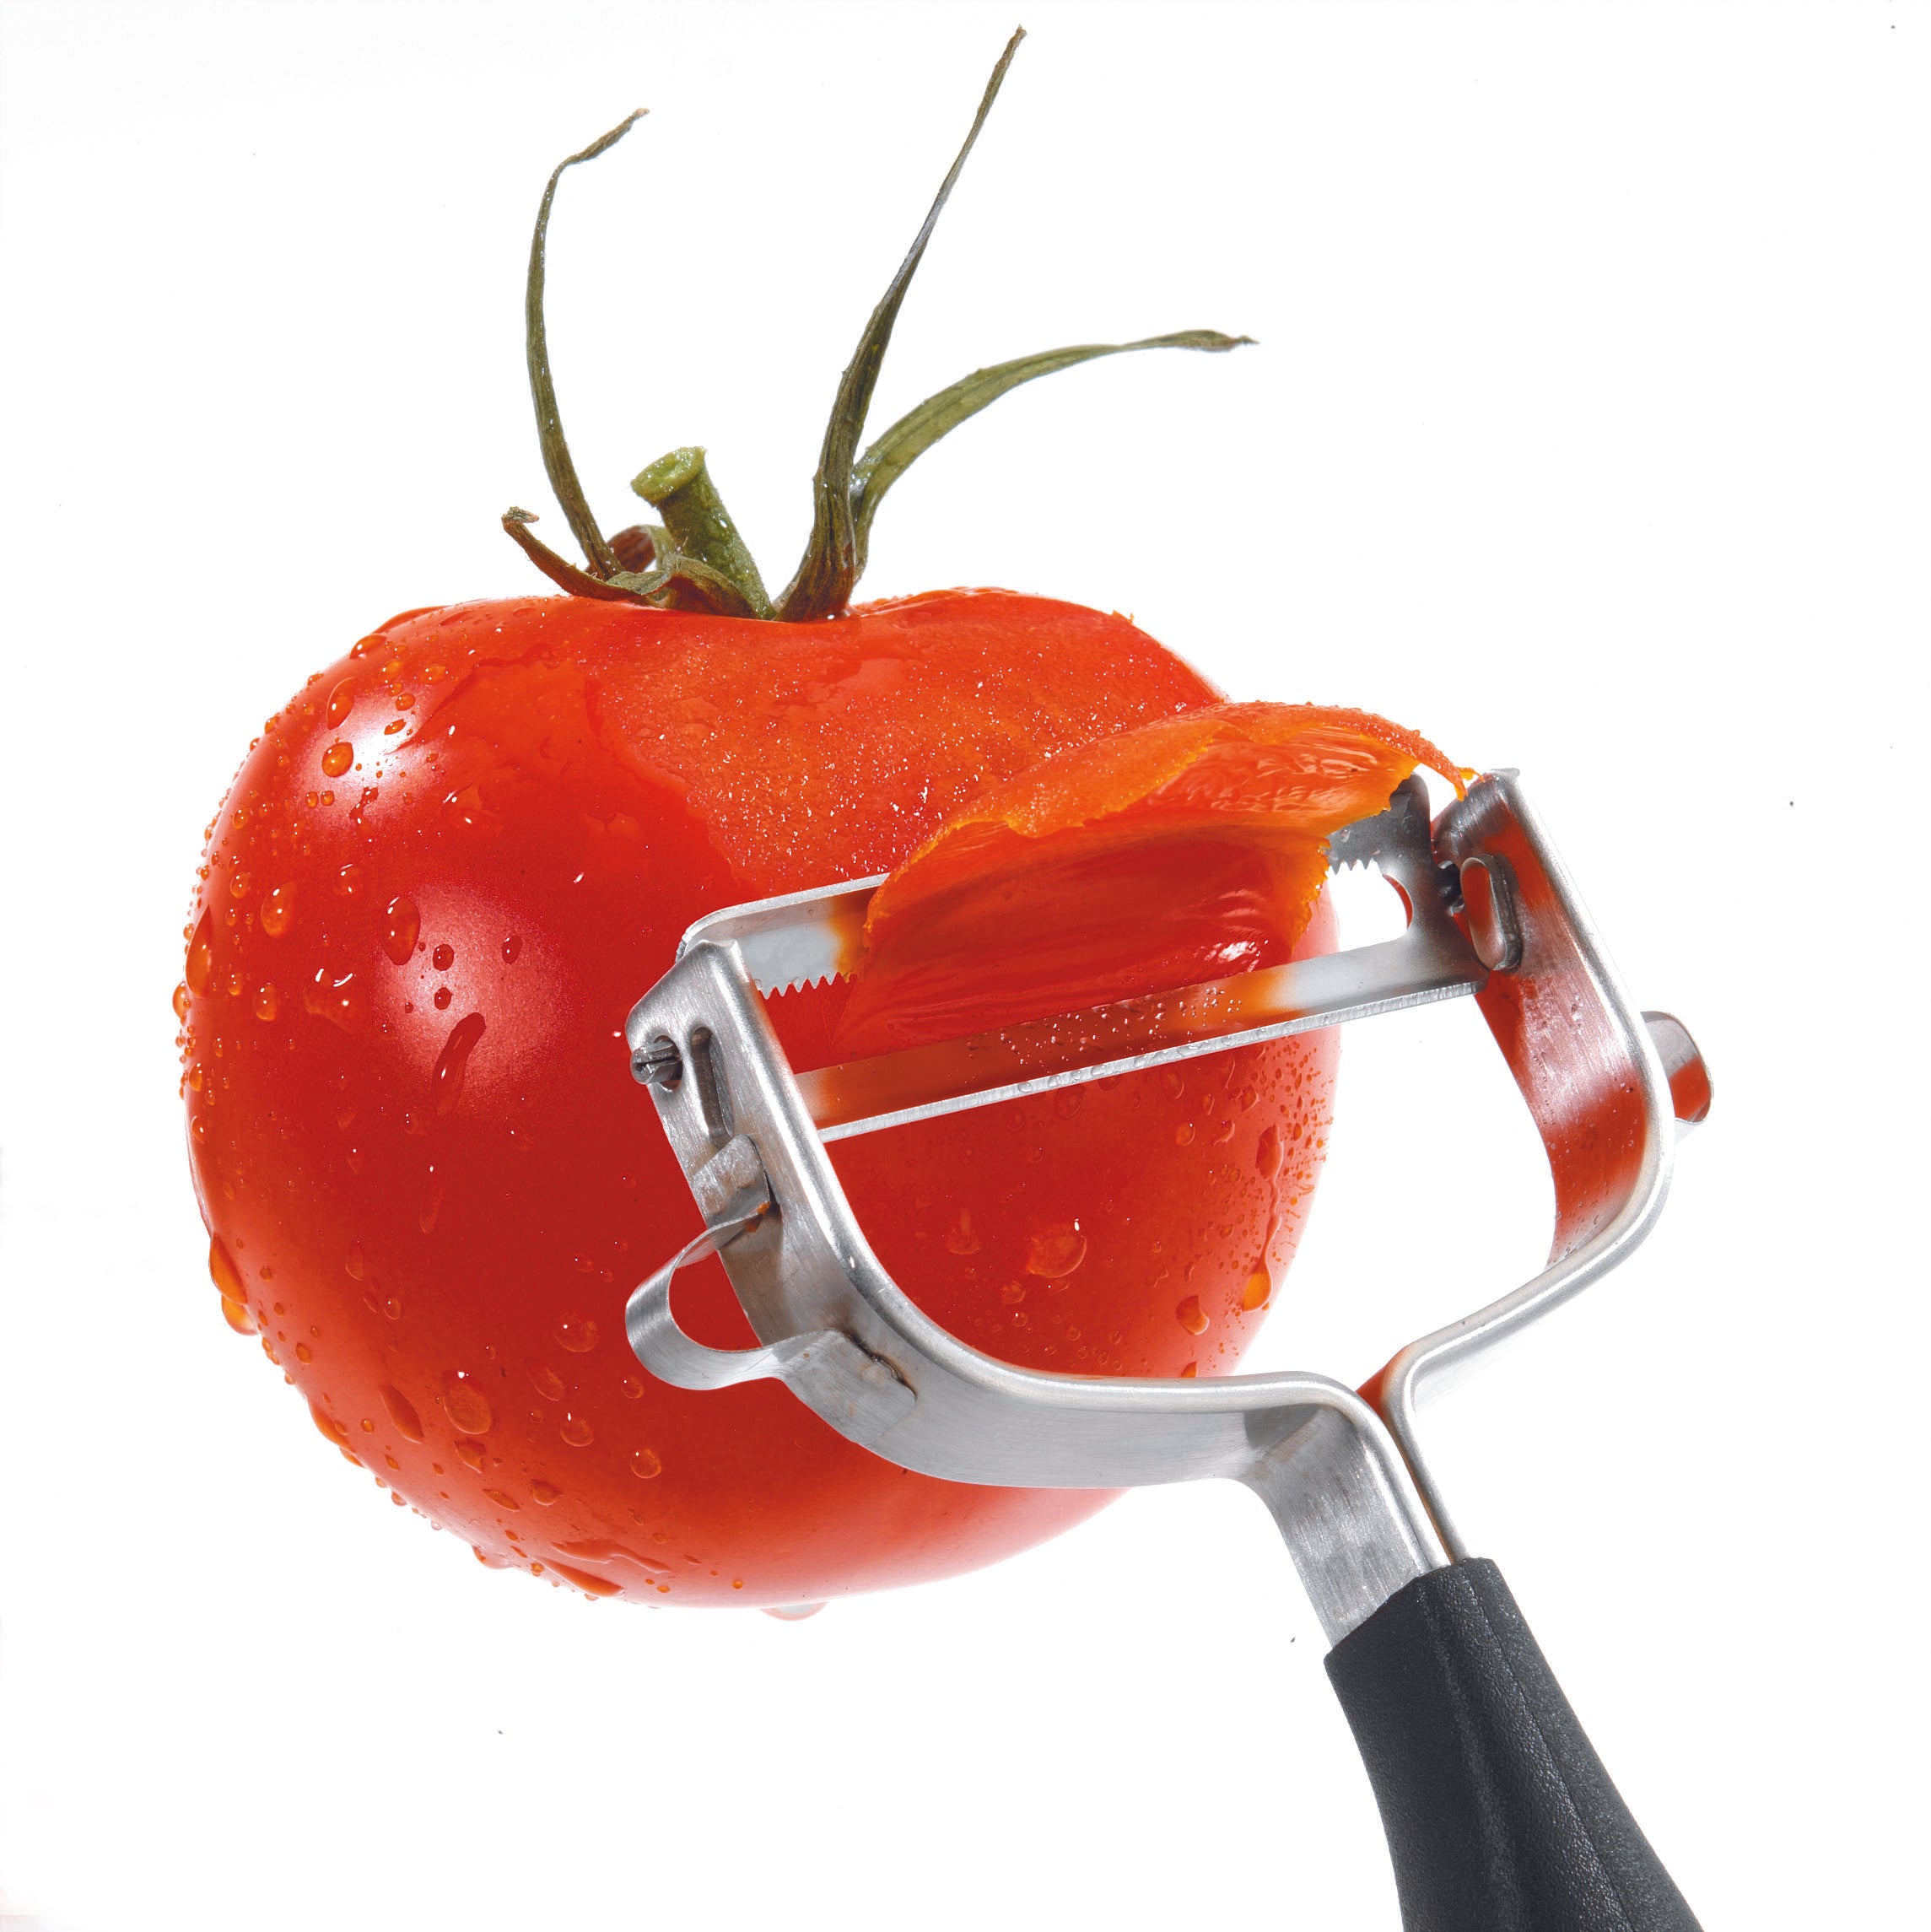 Rosle Stainless Steel Tomato/Kiwi Peeler and Tomato Slicer Set